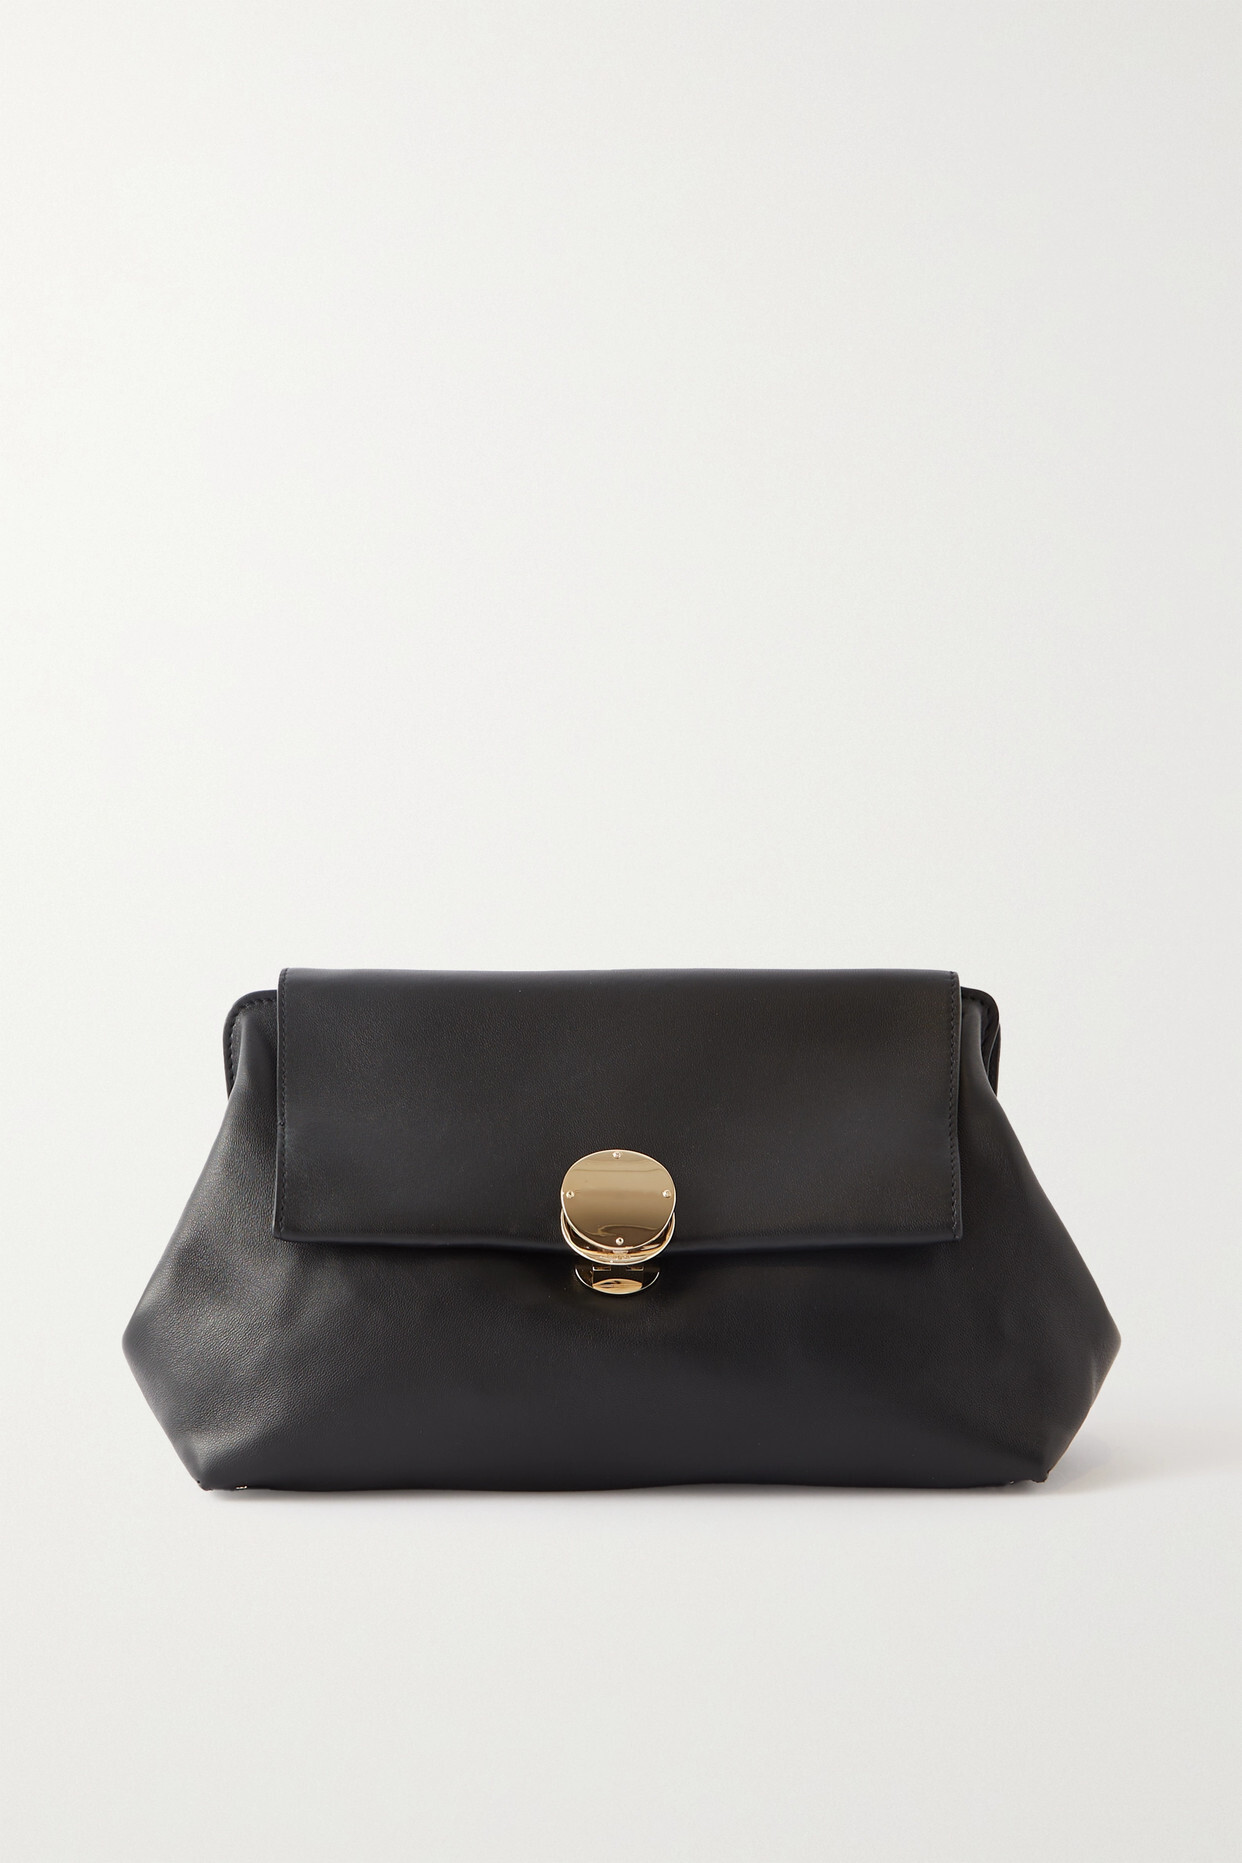 Chloé Chloé - + Net Sustain Penelope Leather Clutch - Black